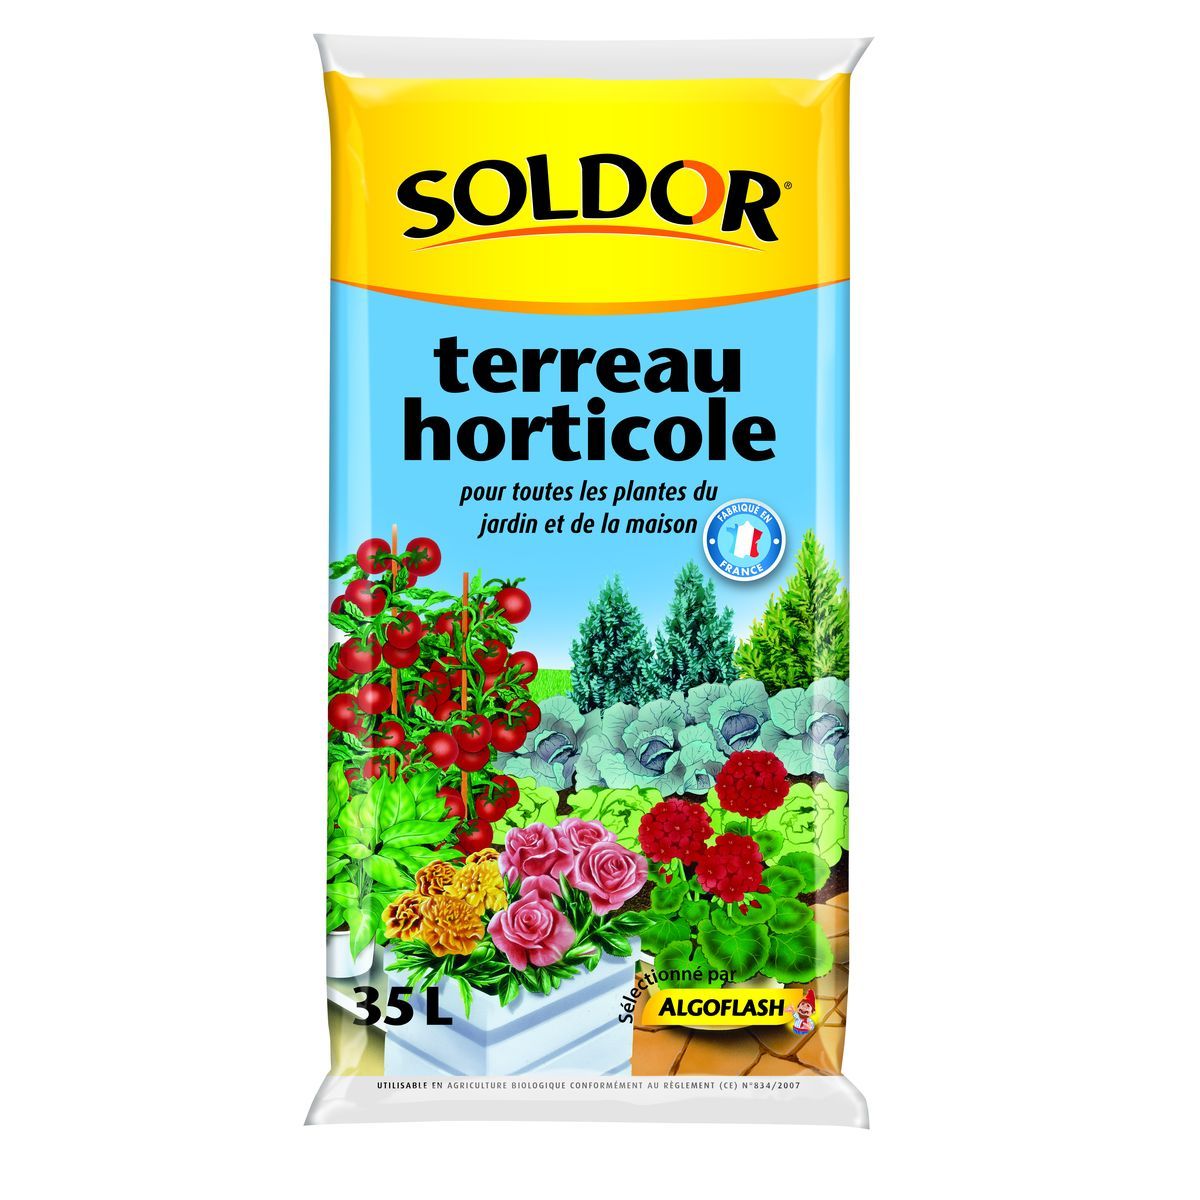 Soldor TERREAU HORTICOLE 35L